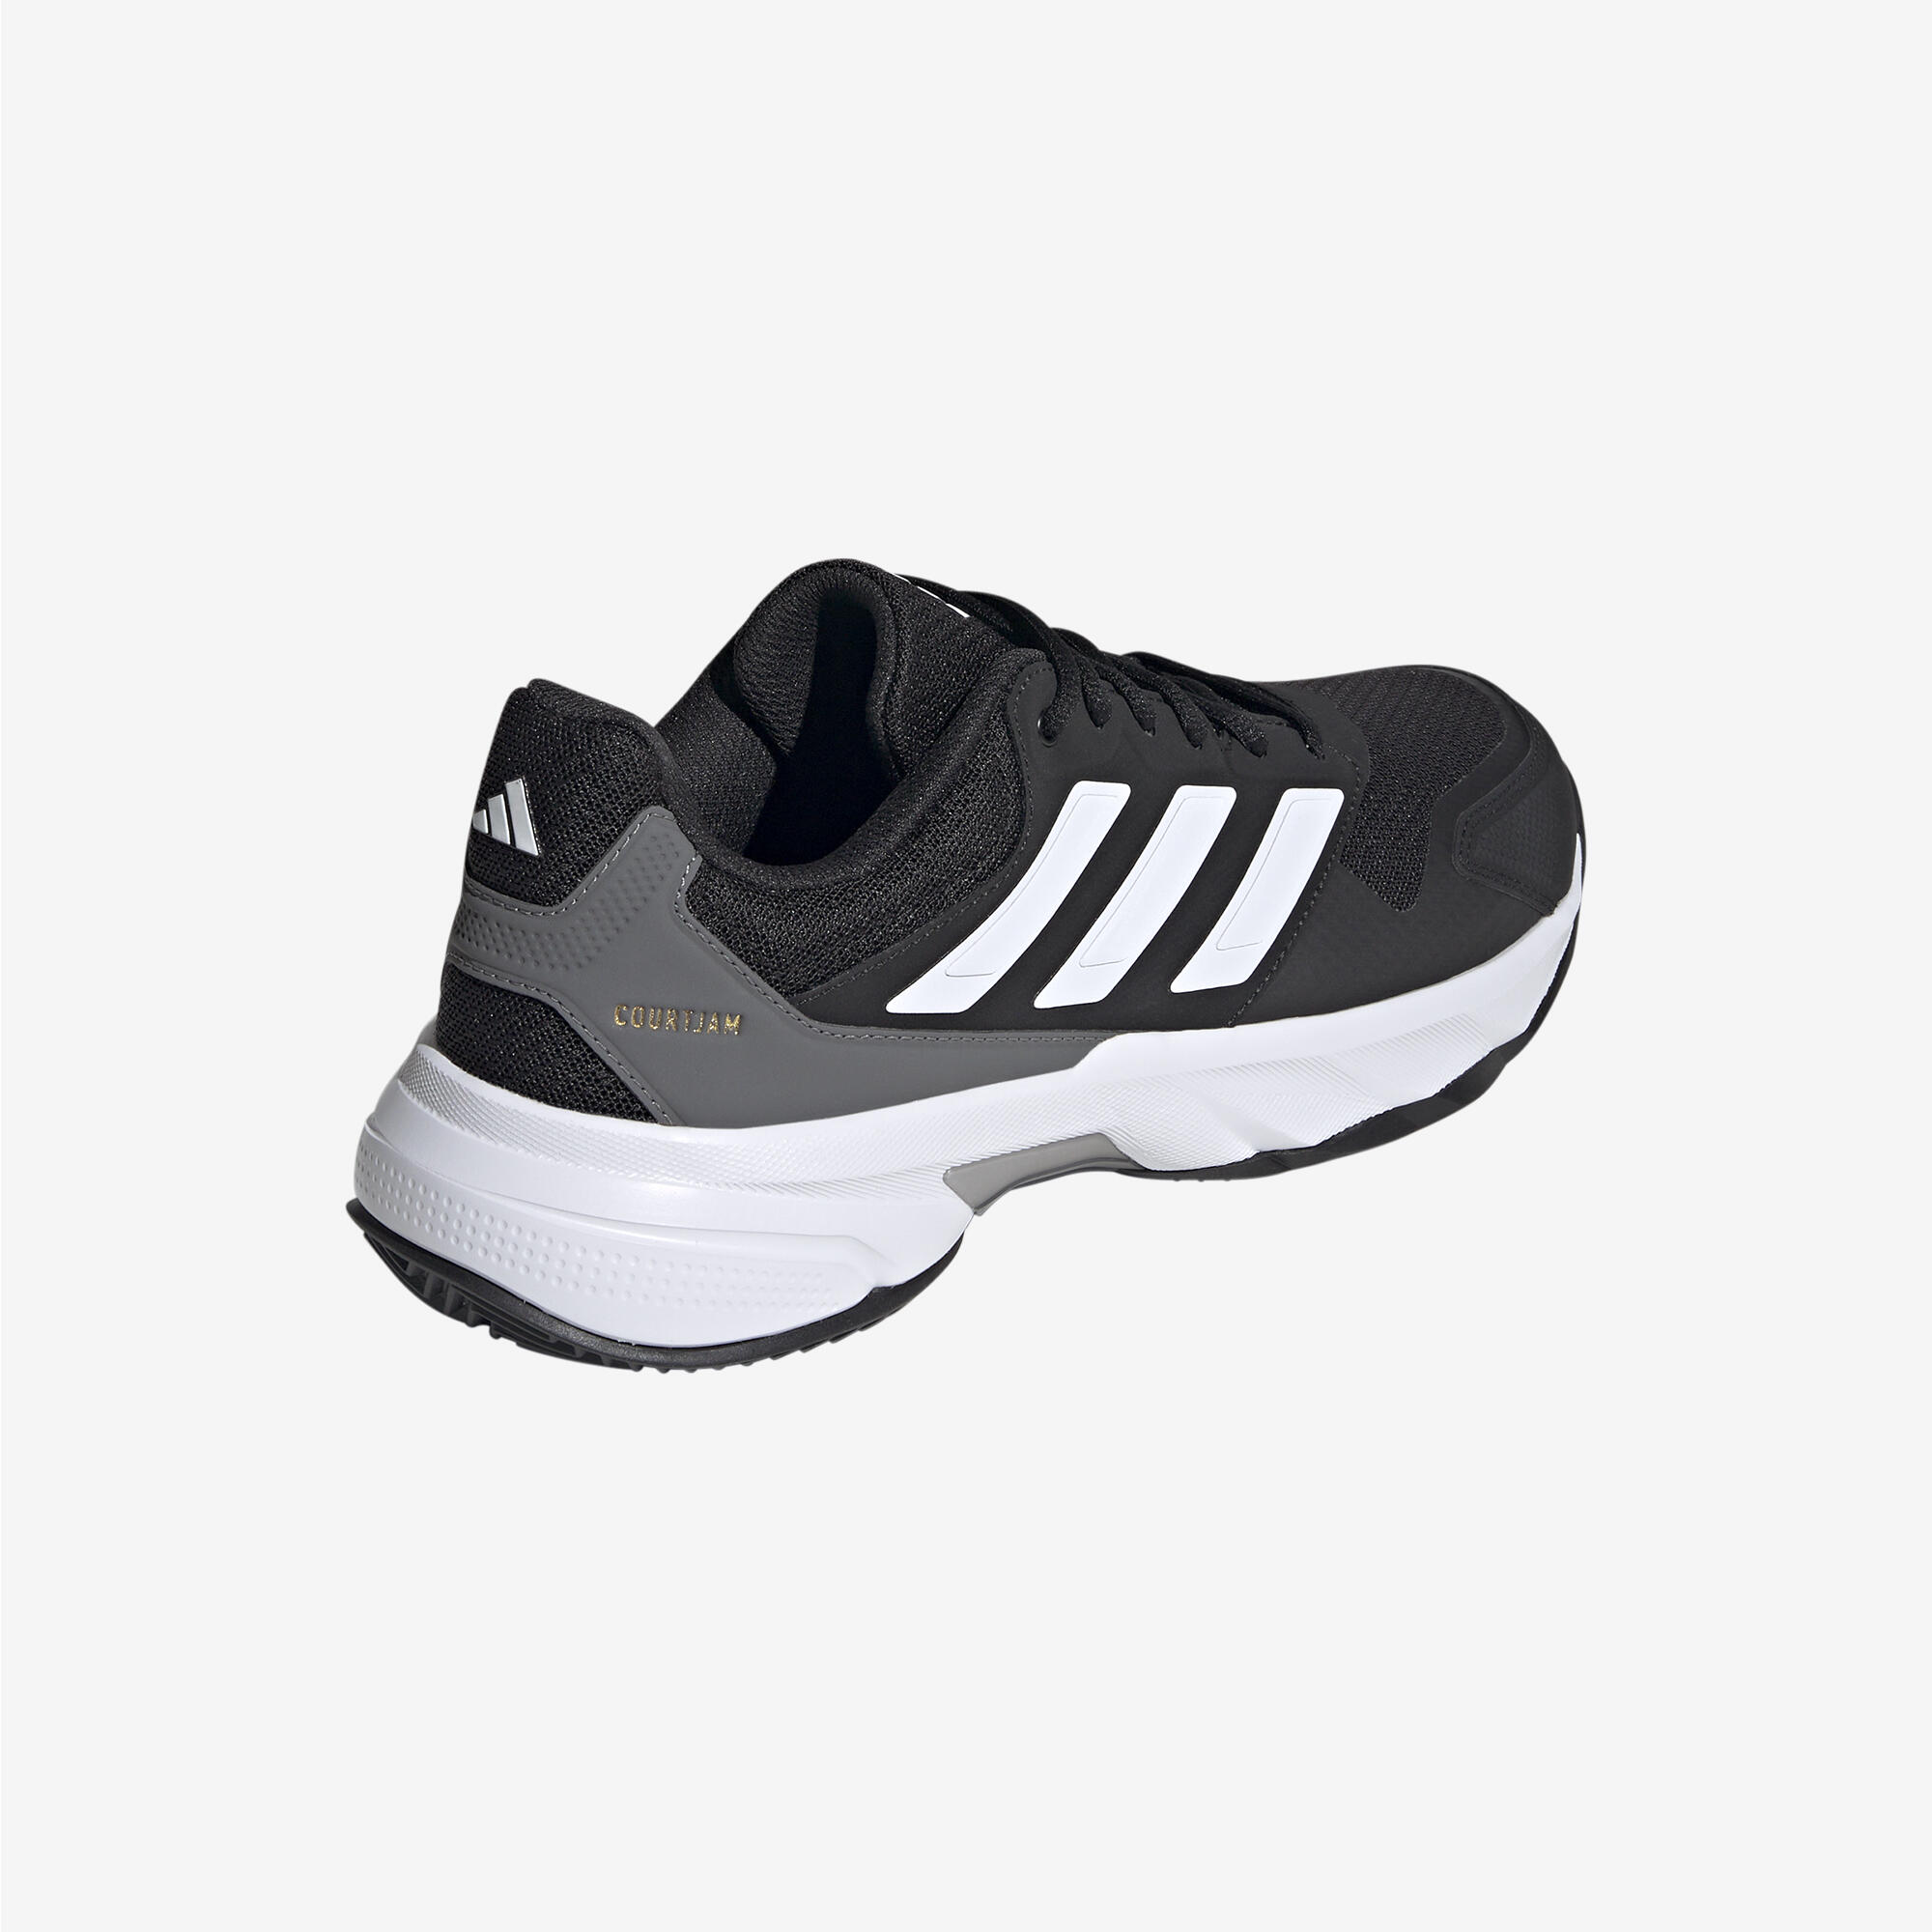 Men's Clay Court Tennis Shoes CourtJam Control - Black/White 6/7